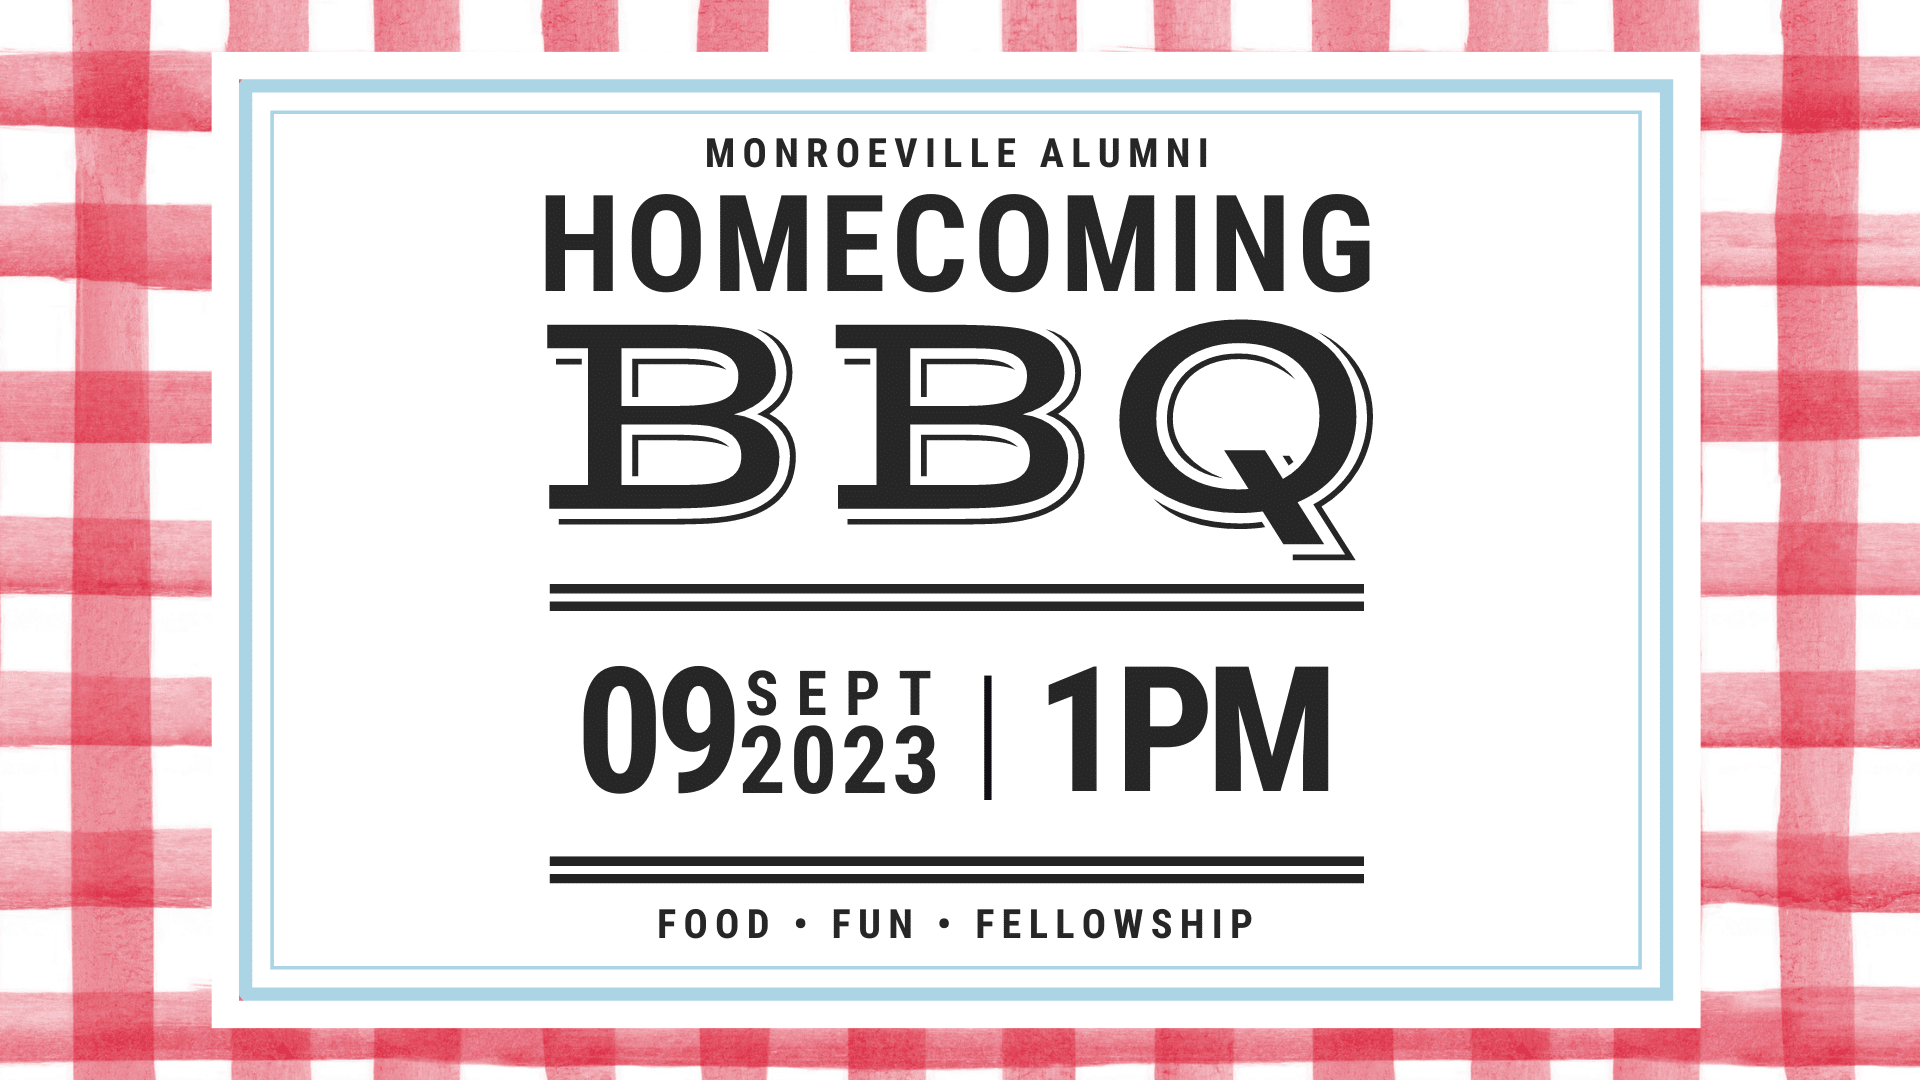 Monroeville Alumni Homecoming BBQ